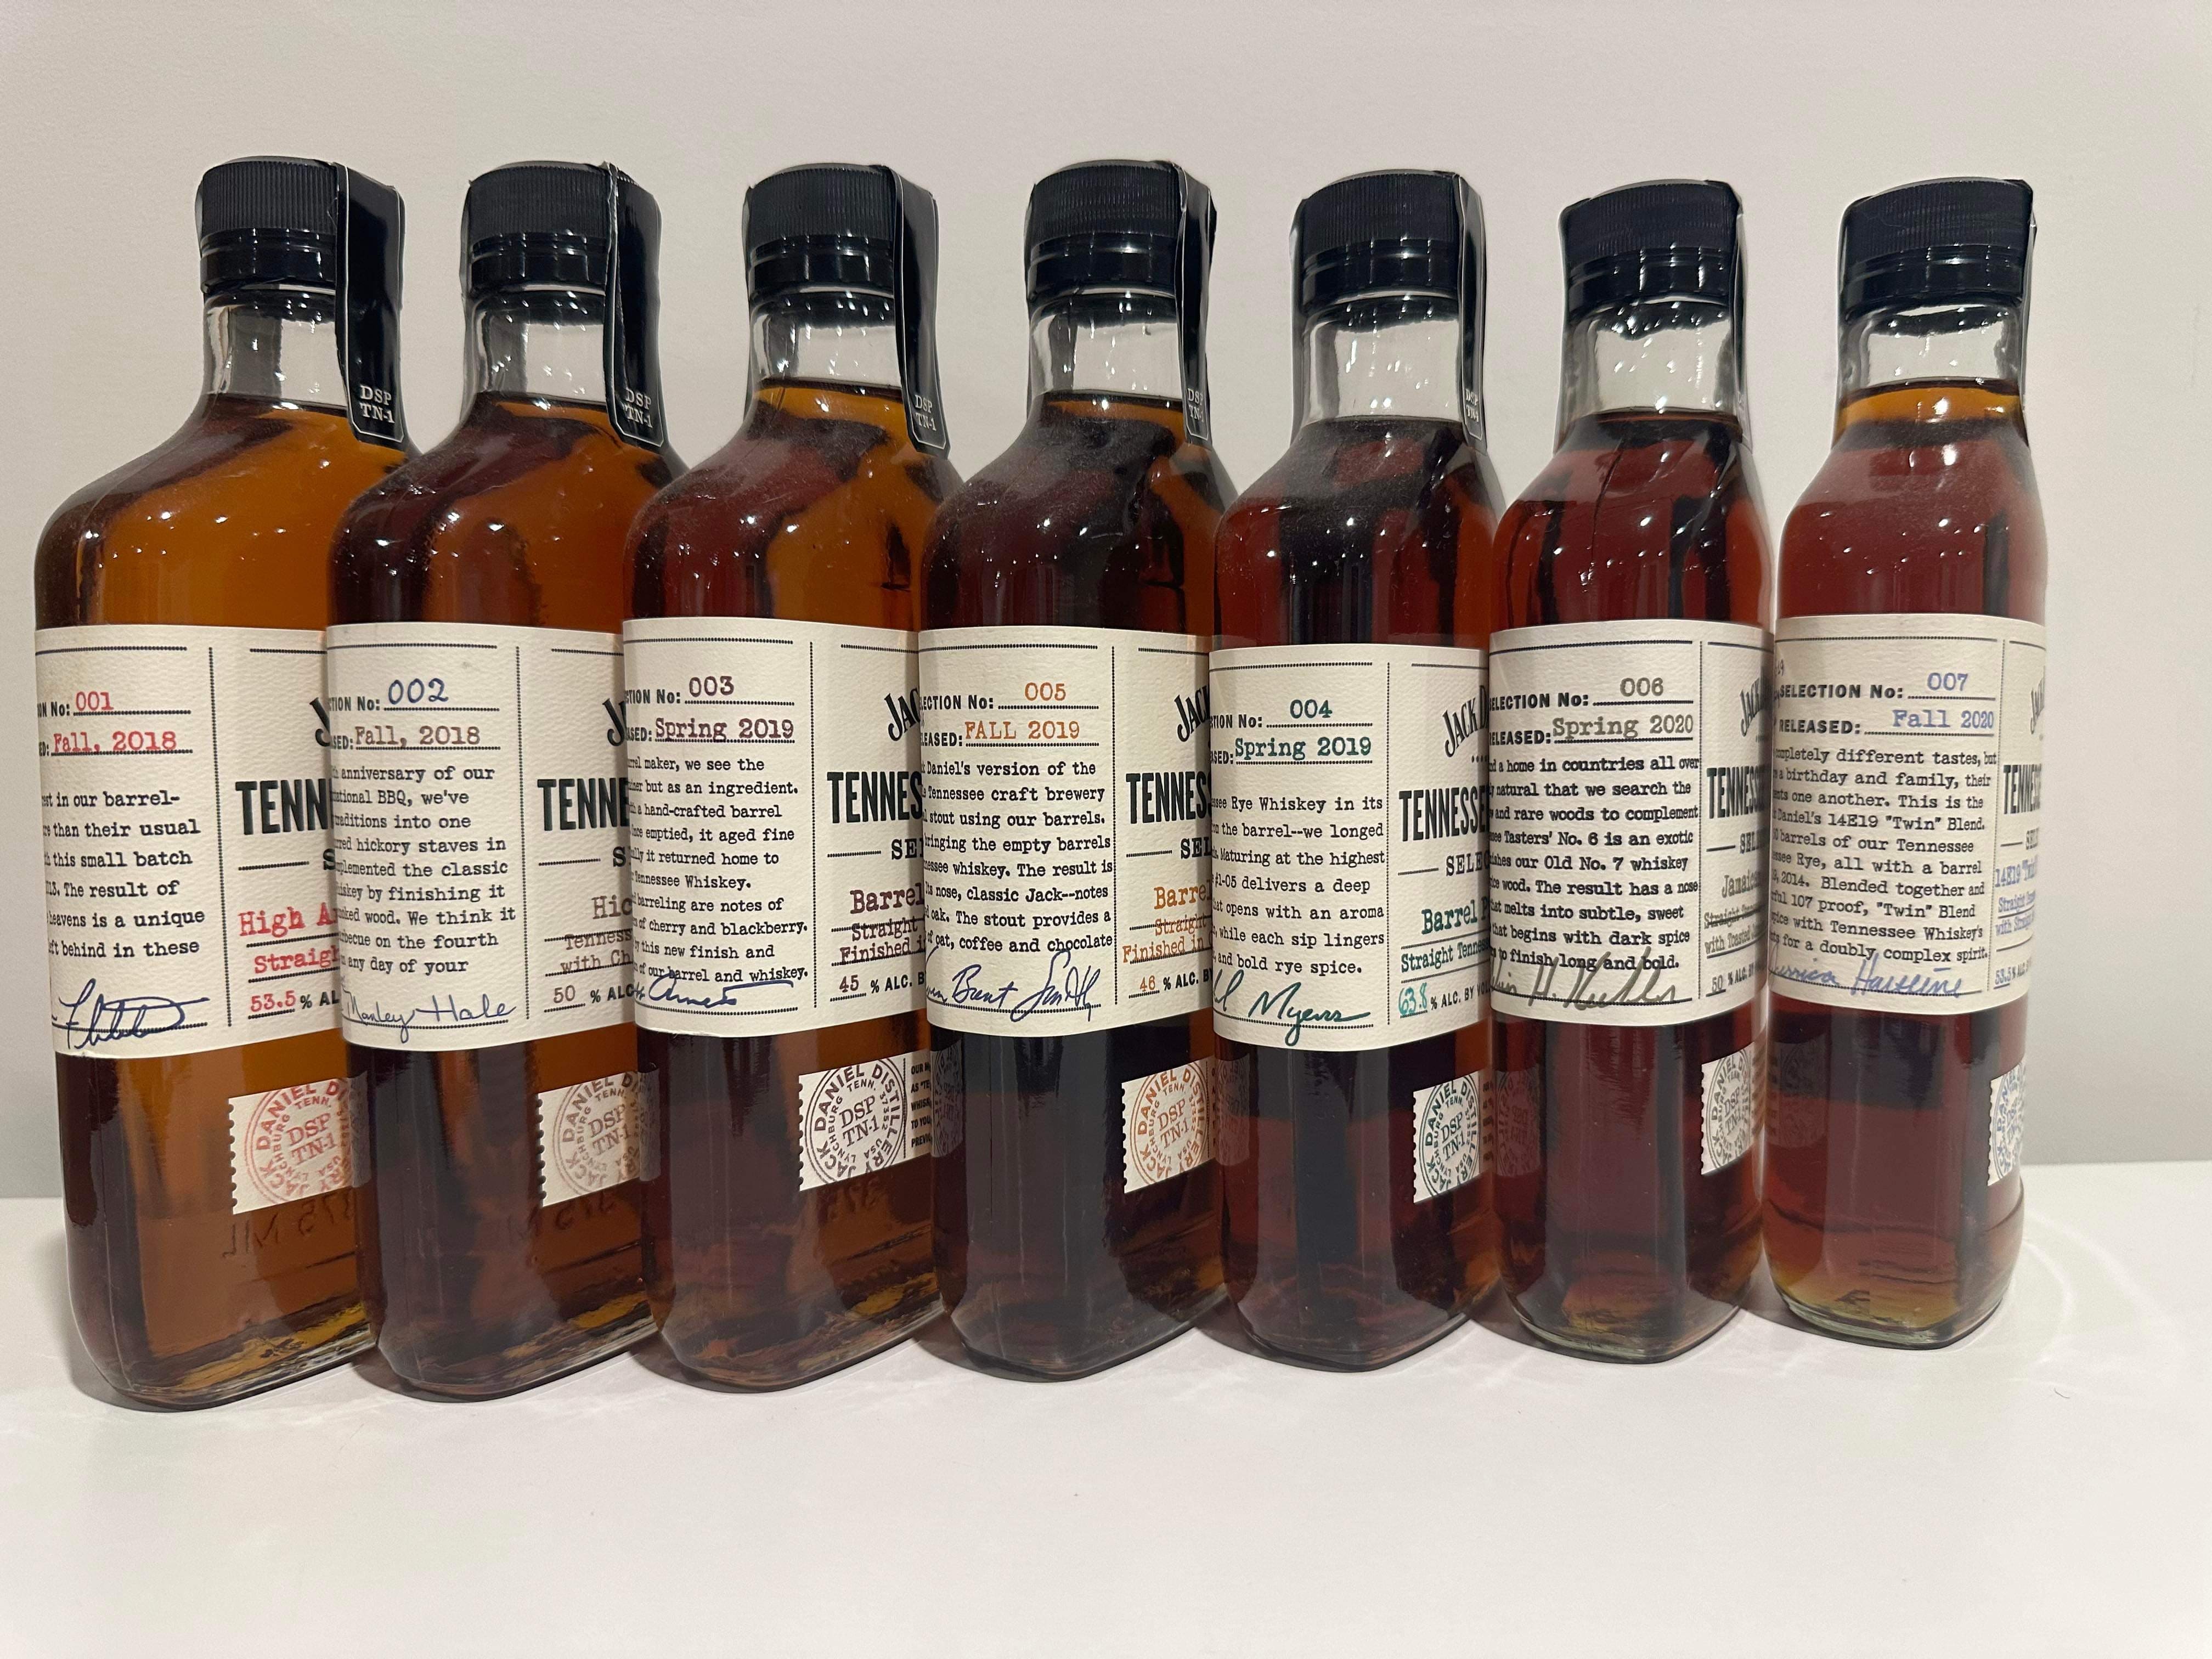 Jack Daniel's Tennessee Tasters Set (7 bottles) Tennessee Whiskey